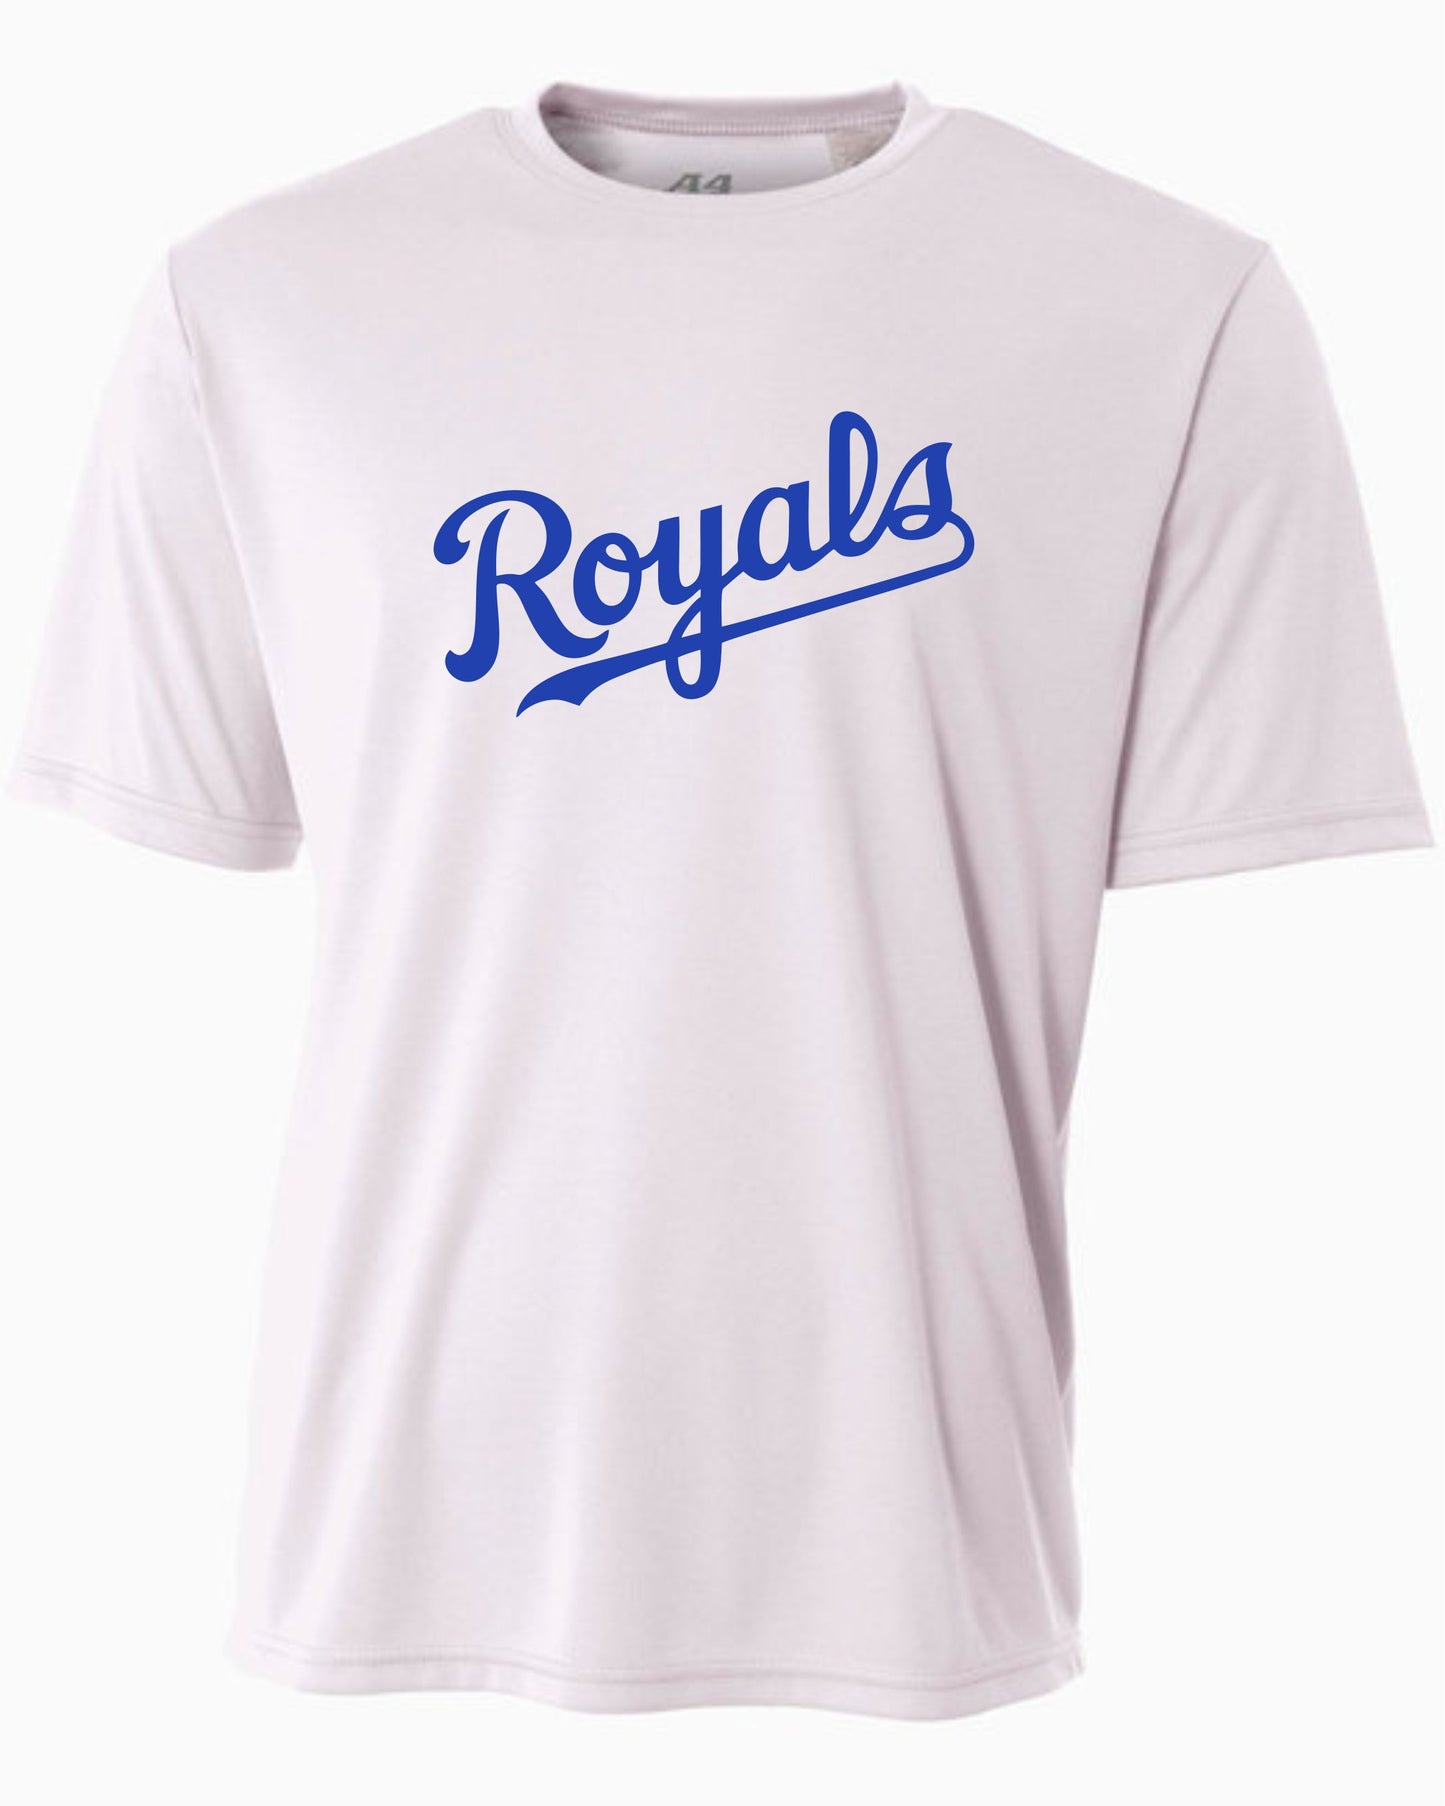 Royals Baseball Dri Fit T-Shirt